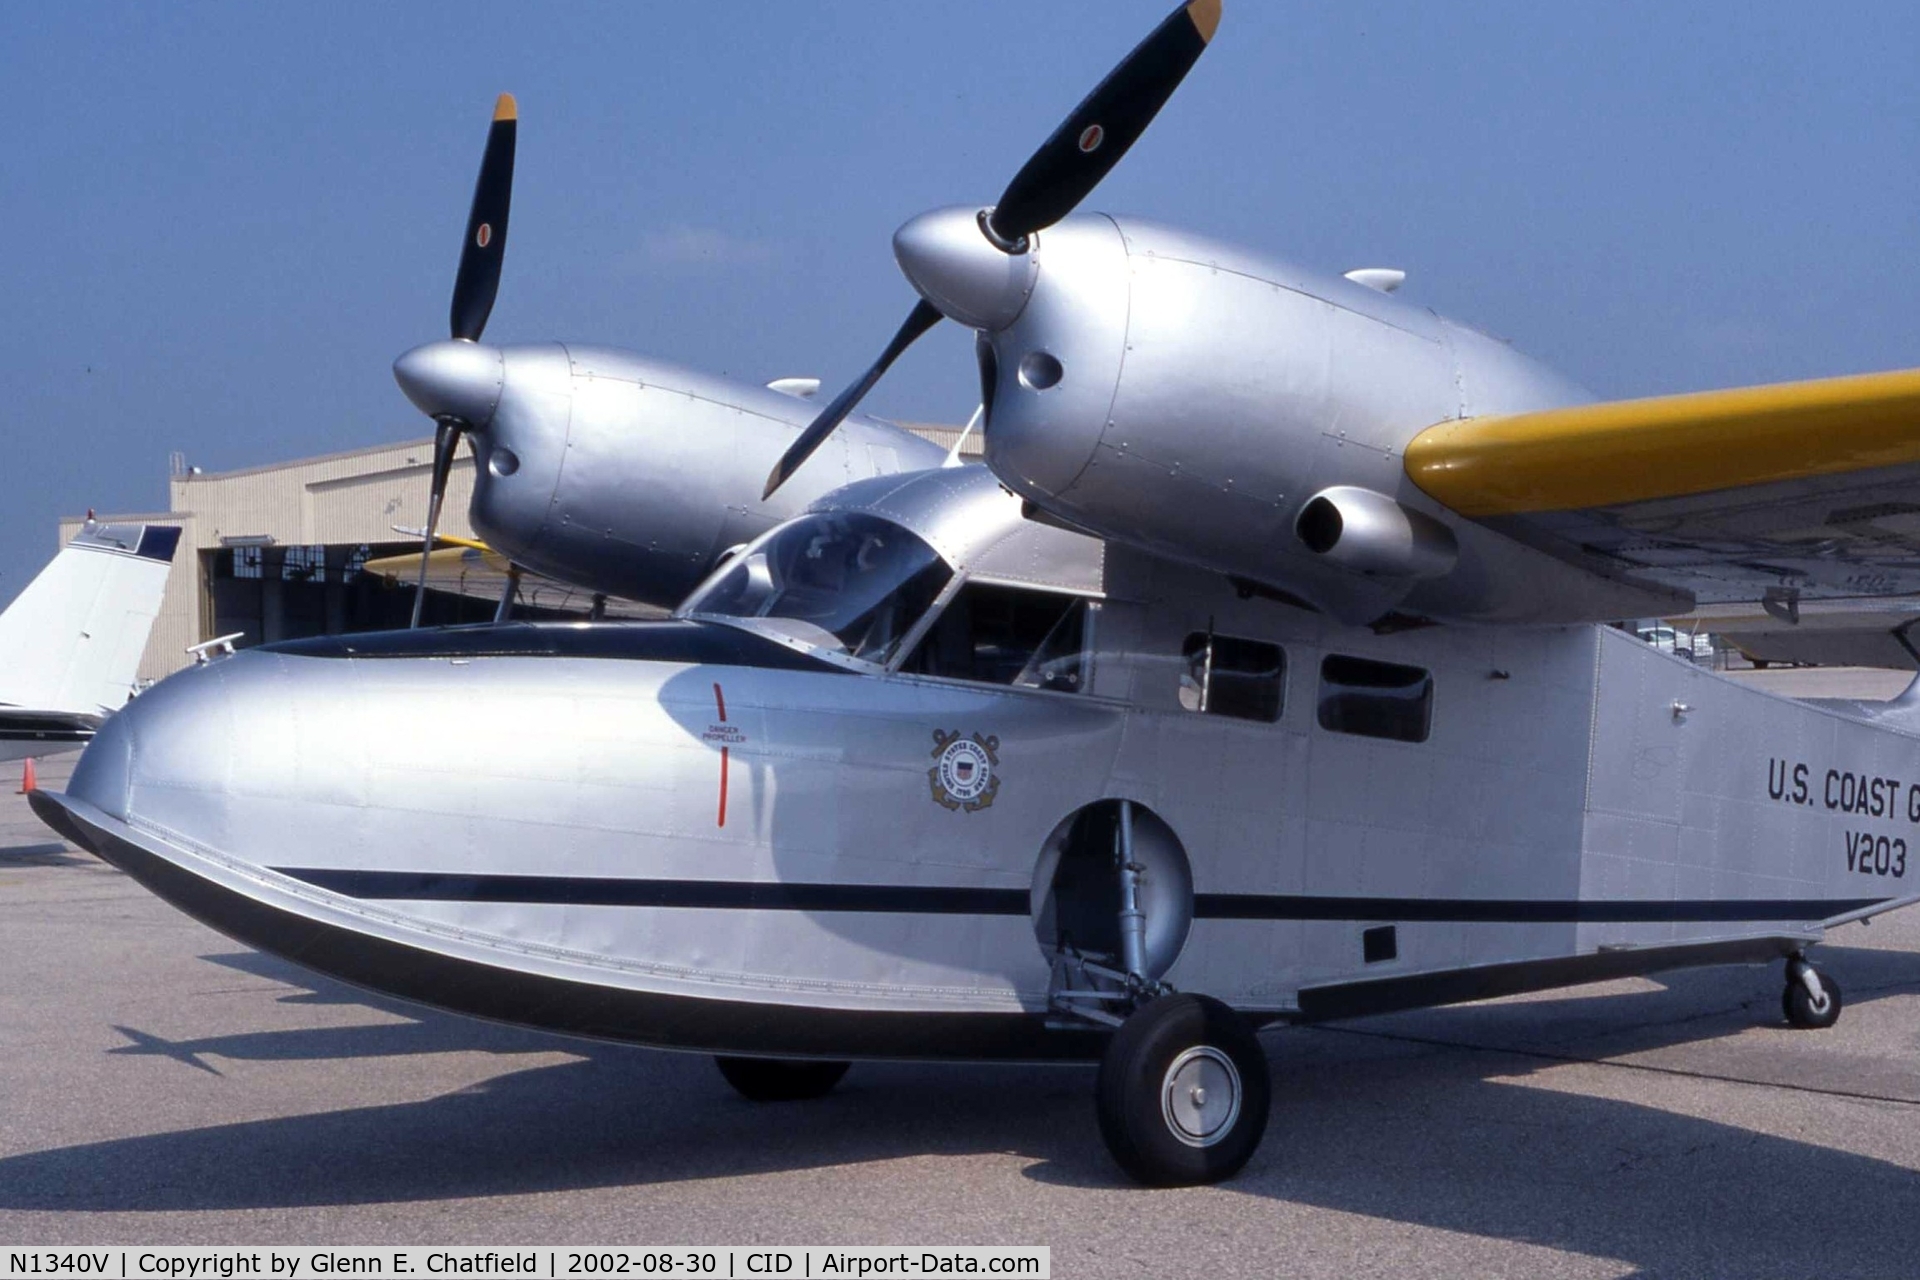 N1340V, 1941 Grumman G-44 Widgeon C/N 1228, J4F-1 Bu. No. V203